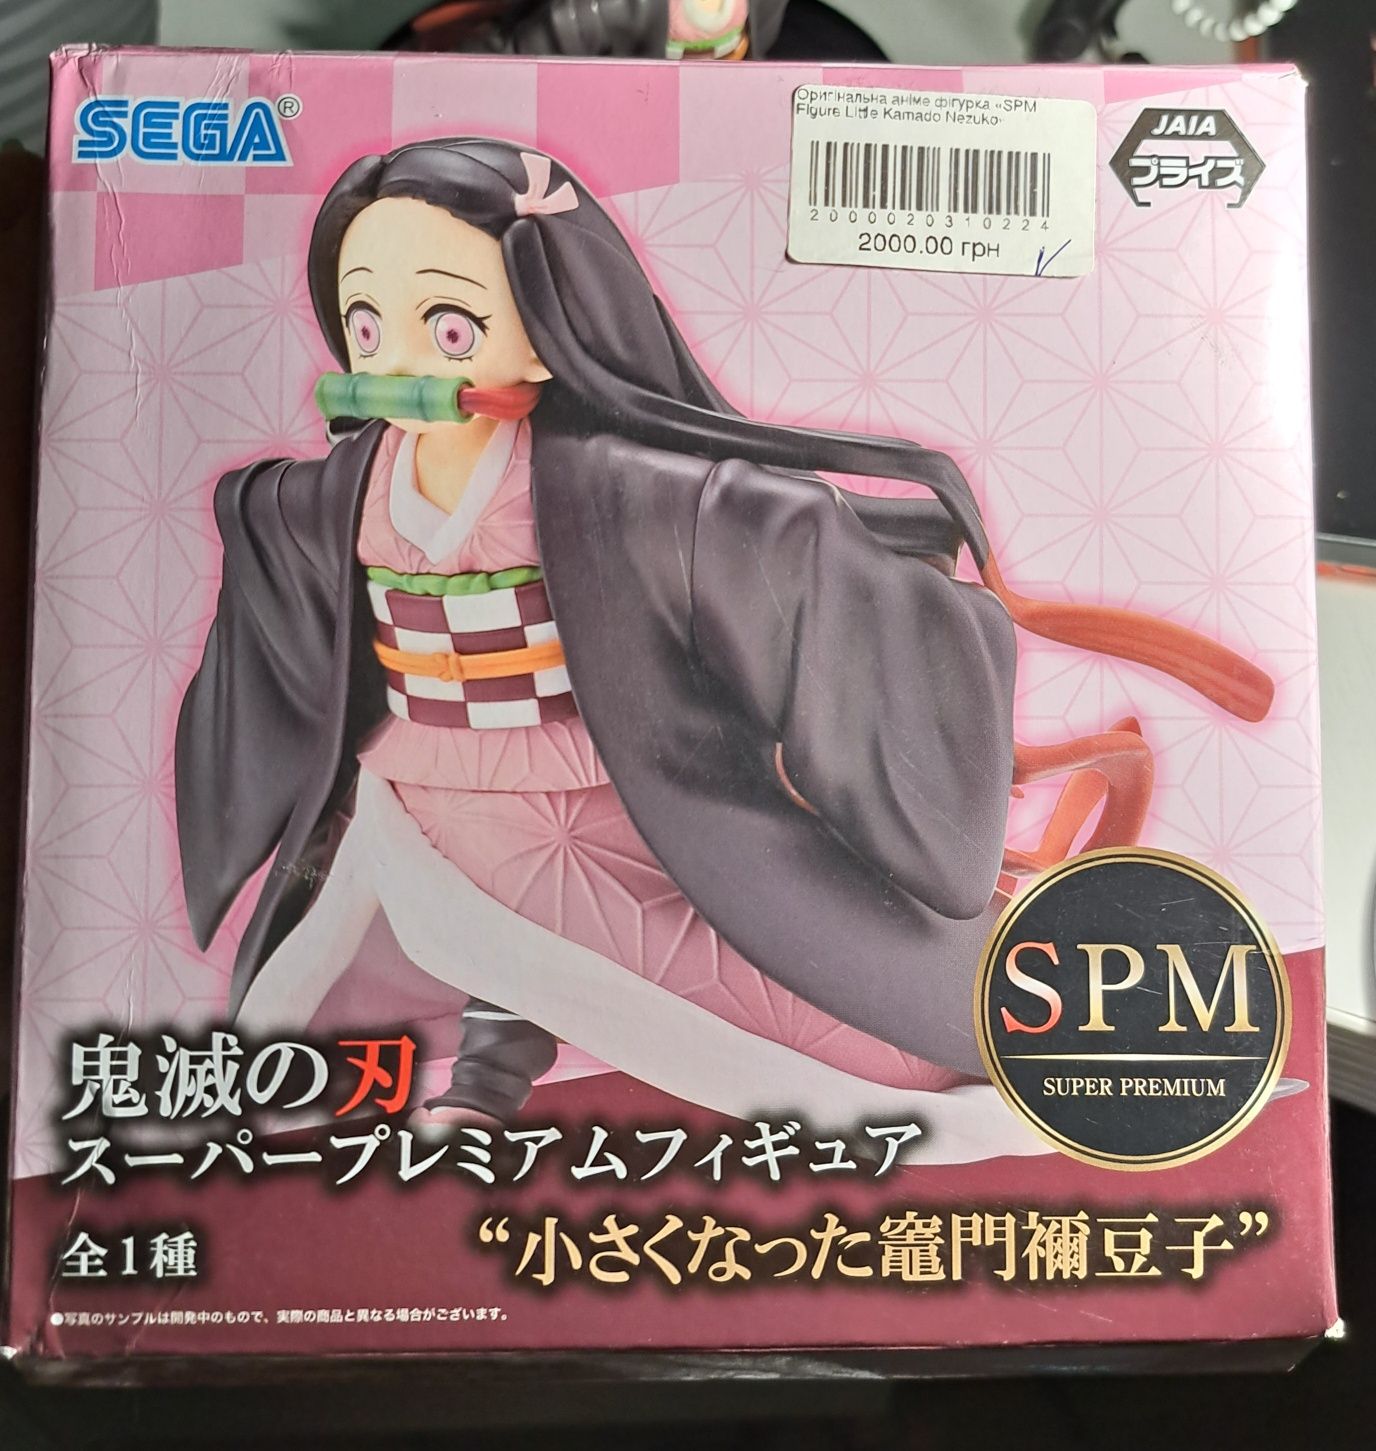 Оригінальна аніме фігурка "SPM Figure Little Kamado Nezuko"